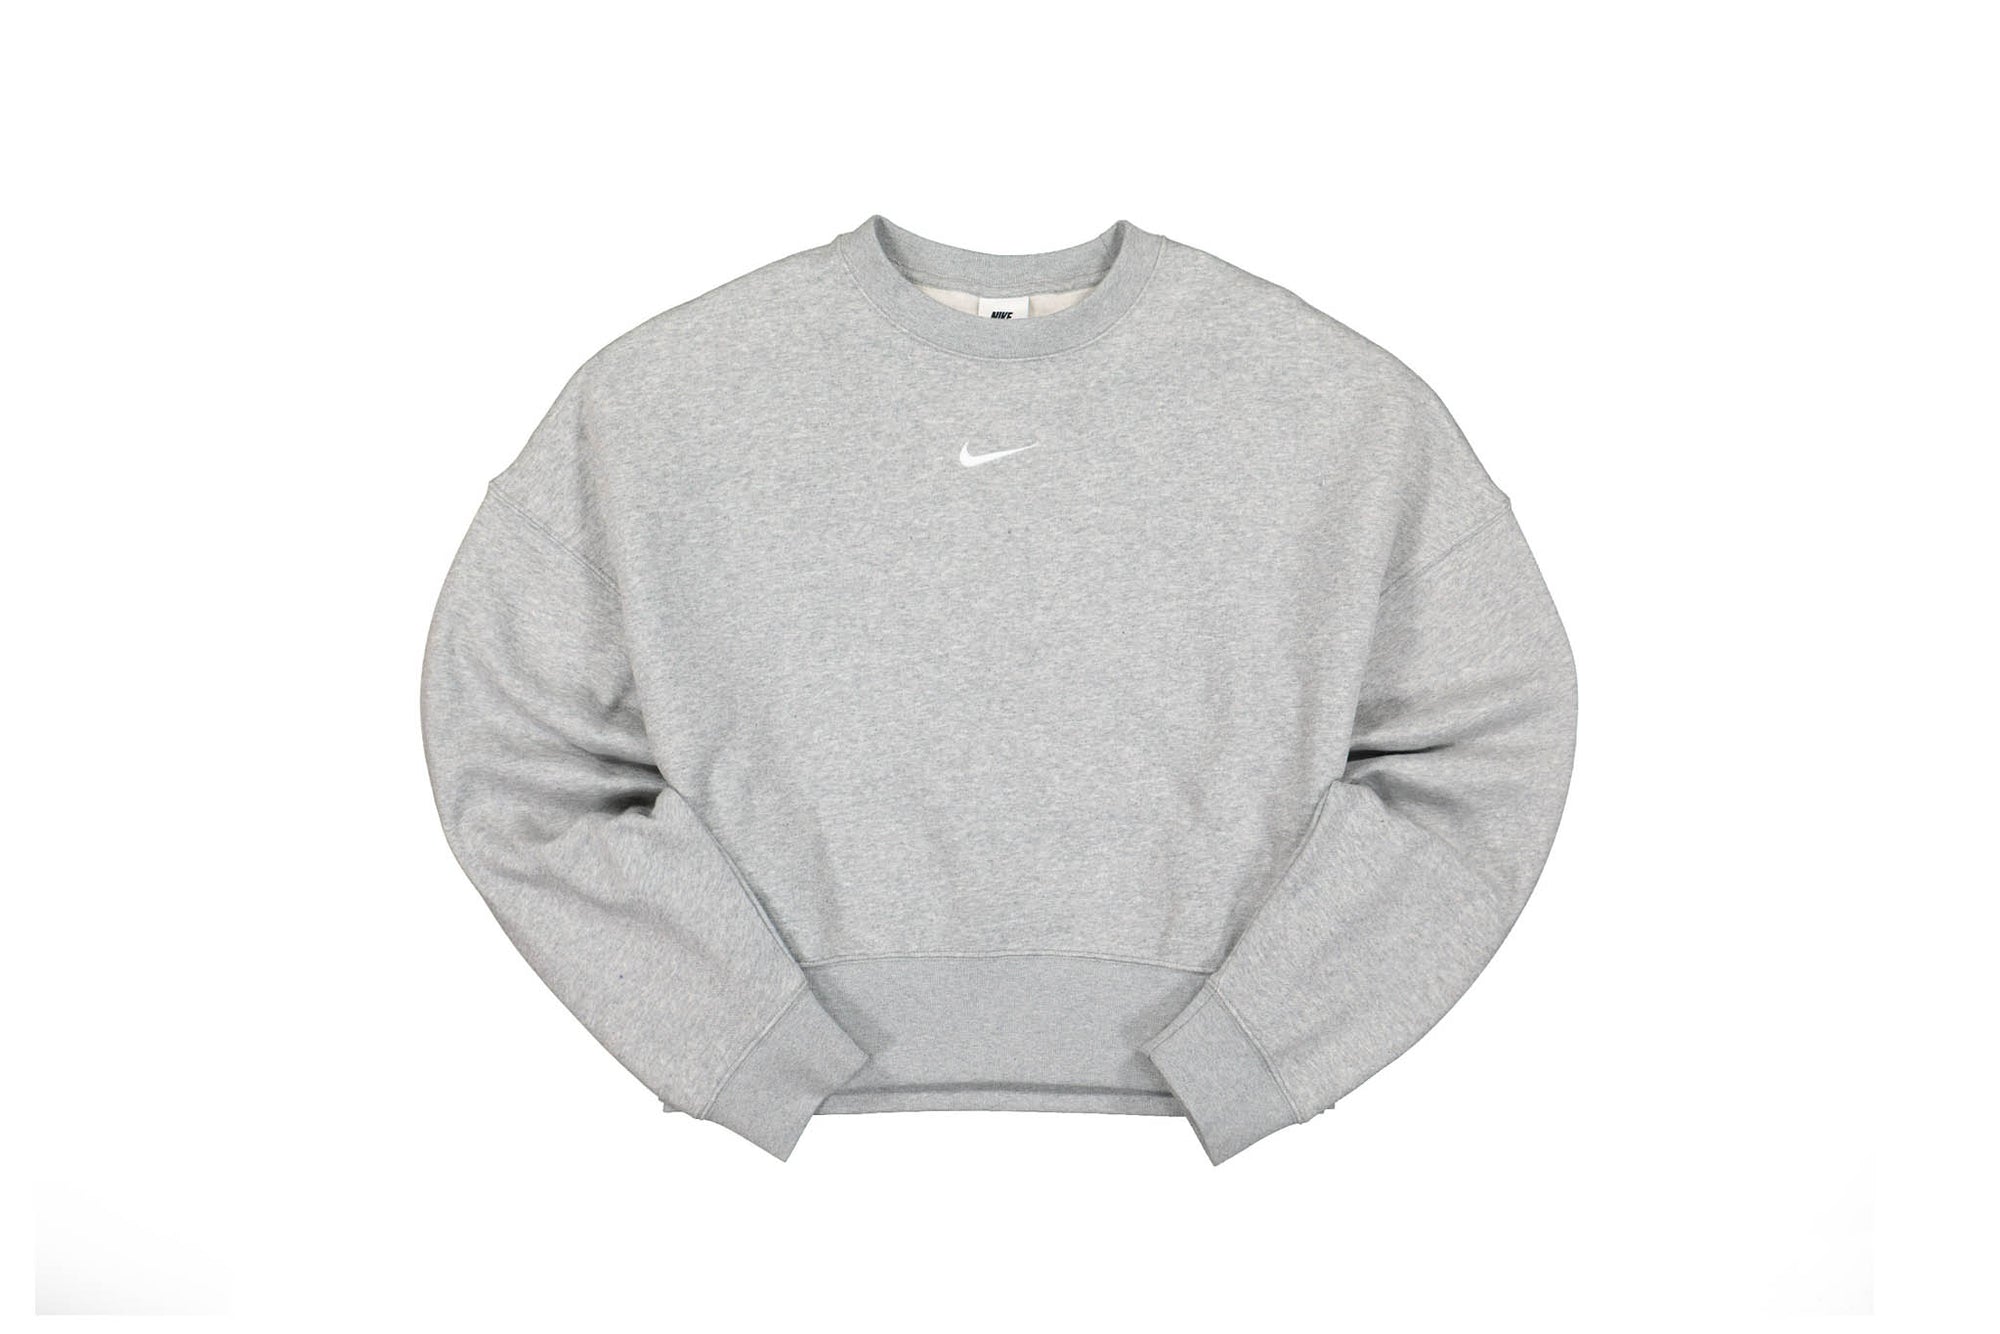 Nike Essential Crew Sweatshirt WMNS